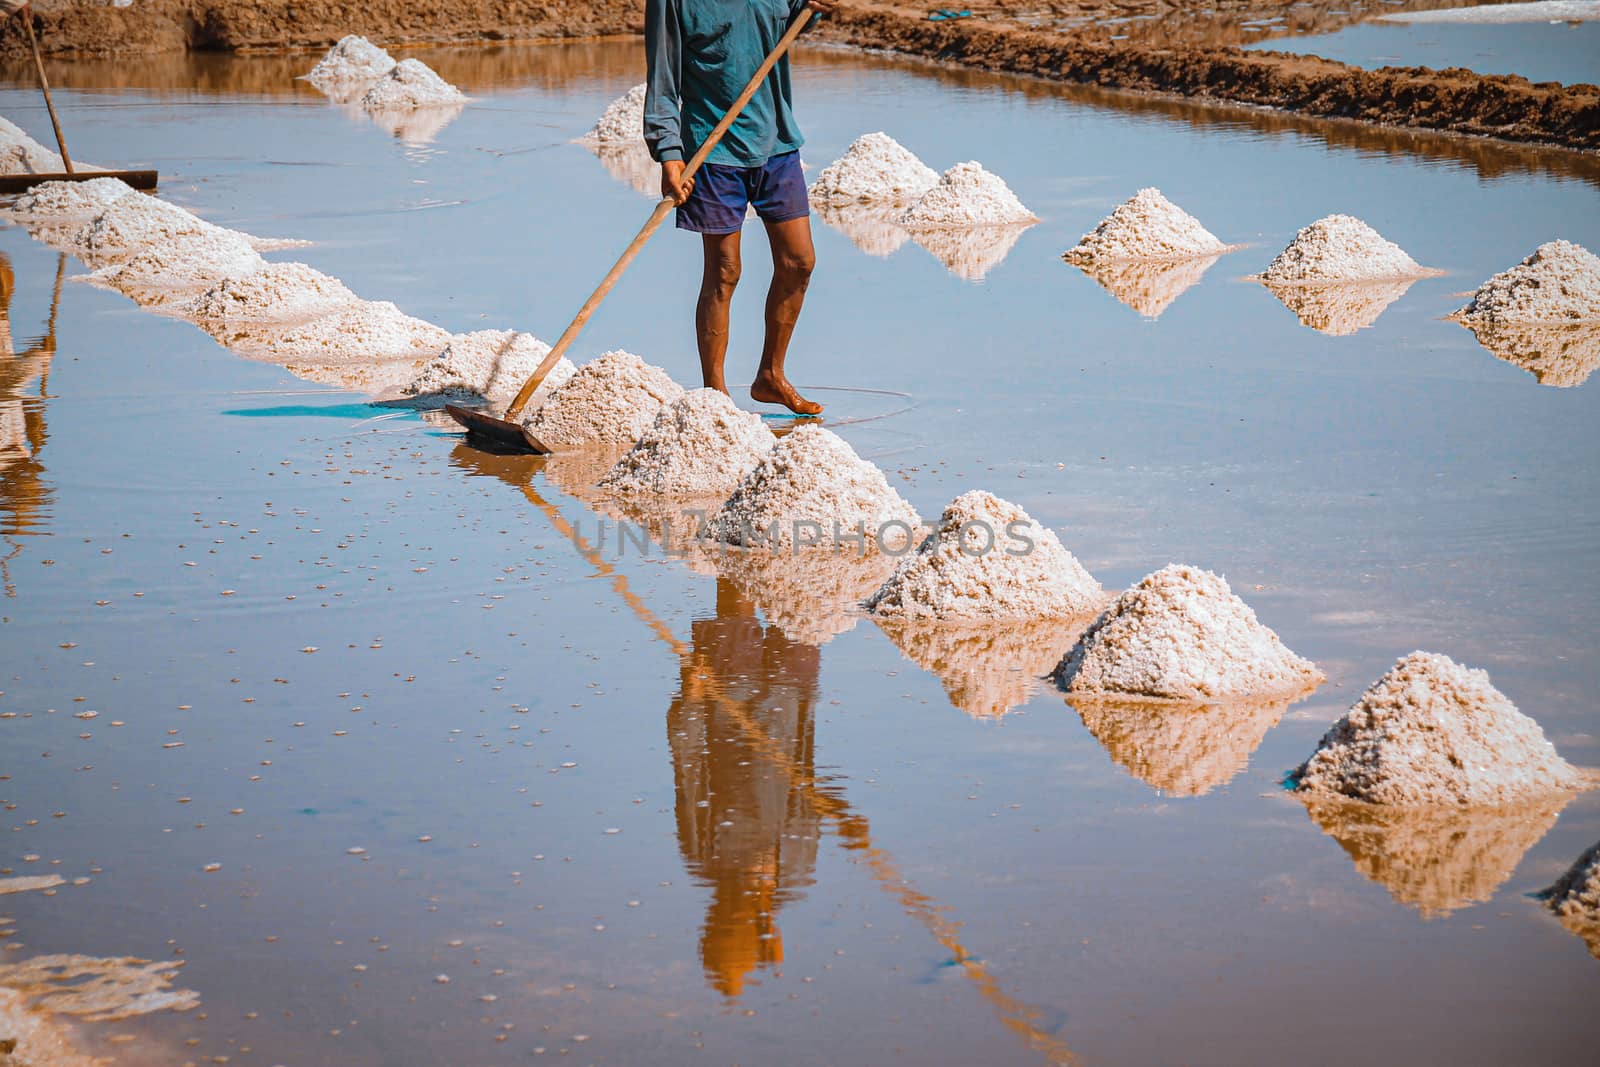 Harvesting Sea salt in Kampot Cambodia by Sonnet15